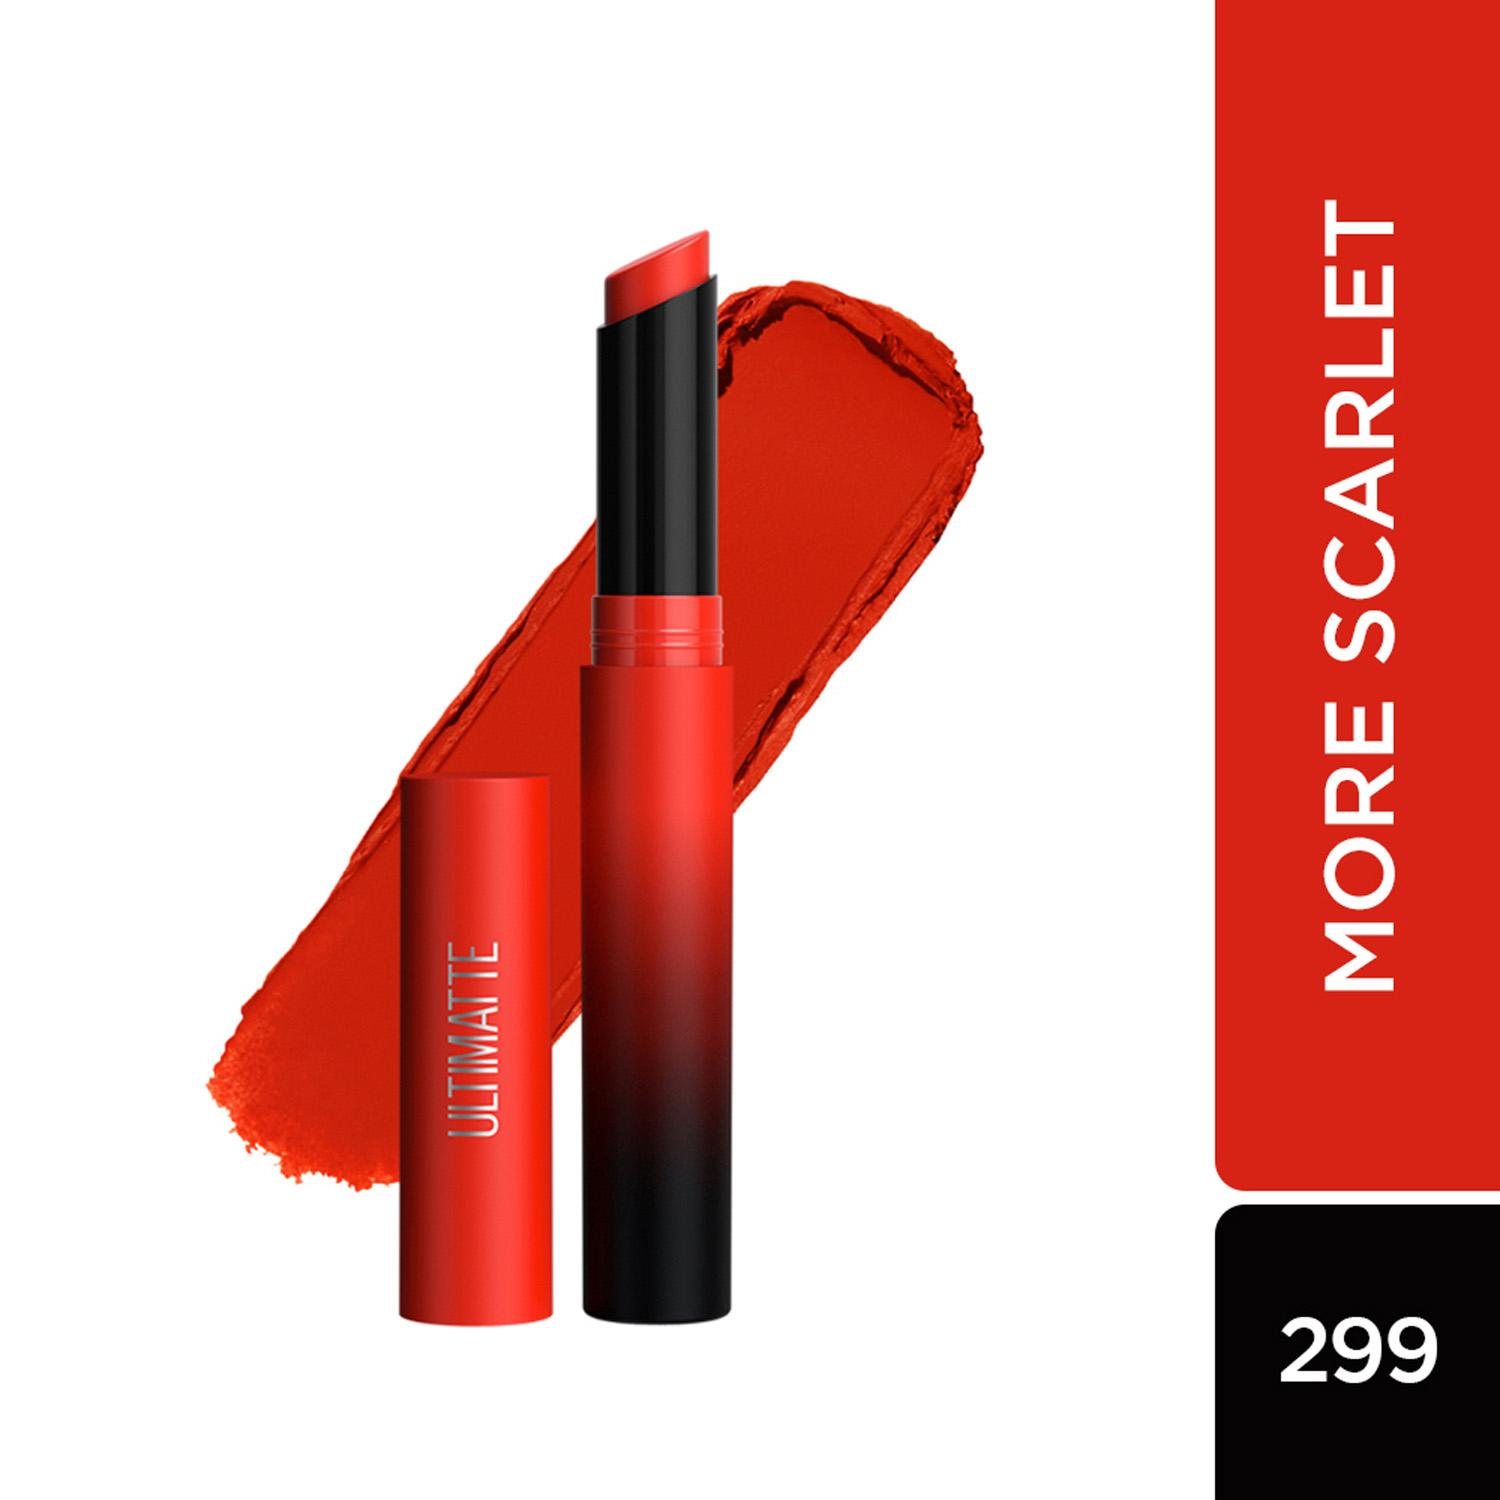 Maybelline New York | Maybelline New York Color Sensational Ultimattes Lipstick - More Scarlet (1.7g)